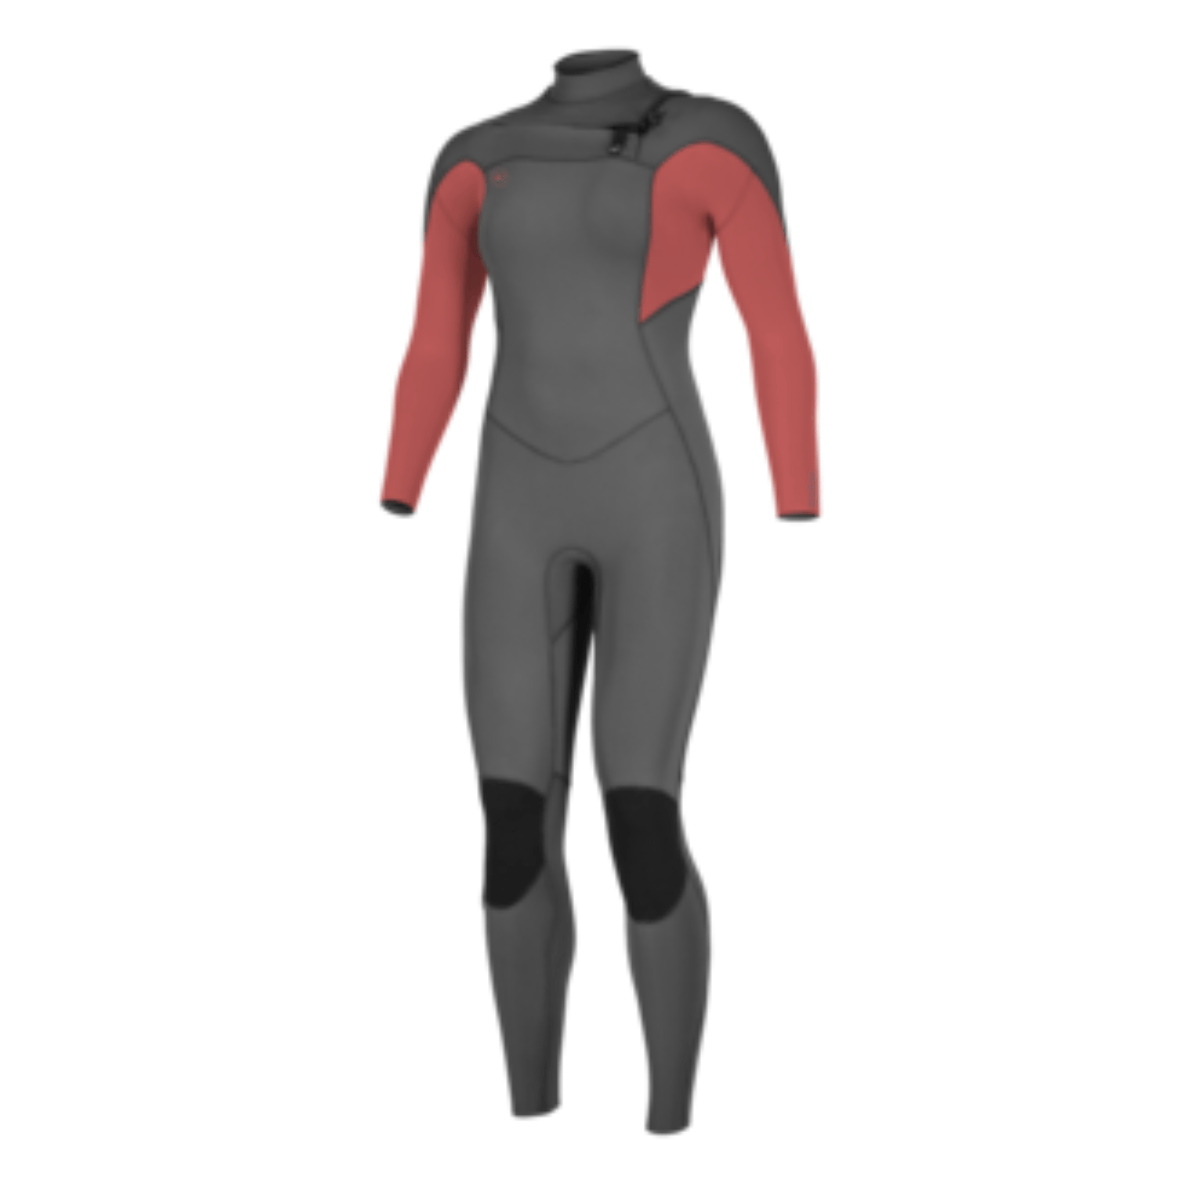 Oneill Women's Ninja 4/3 Chest Zip Full Suit in Graphite and Tea Rose - BoardCo